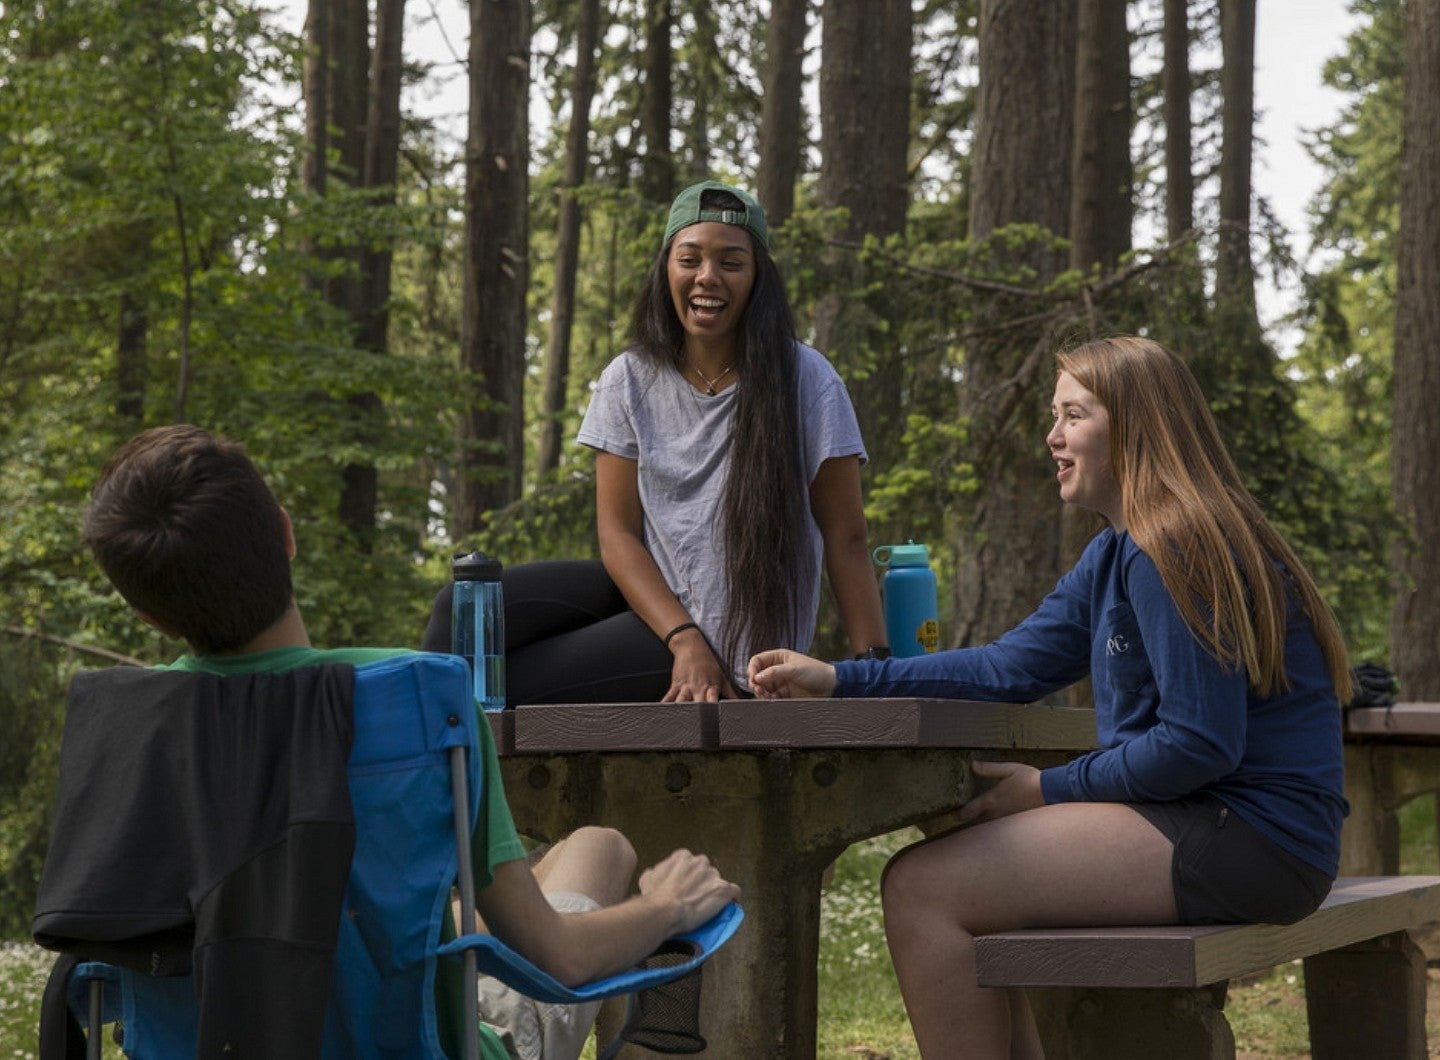 Students talking outdoors at picnic table